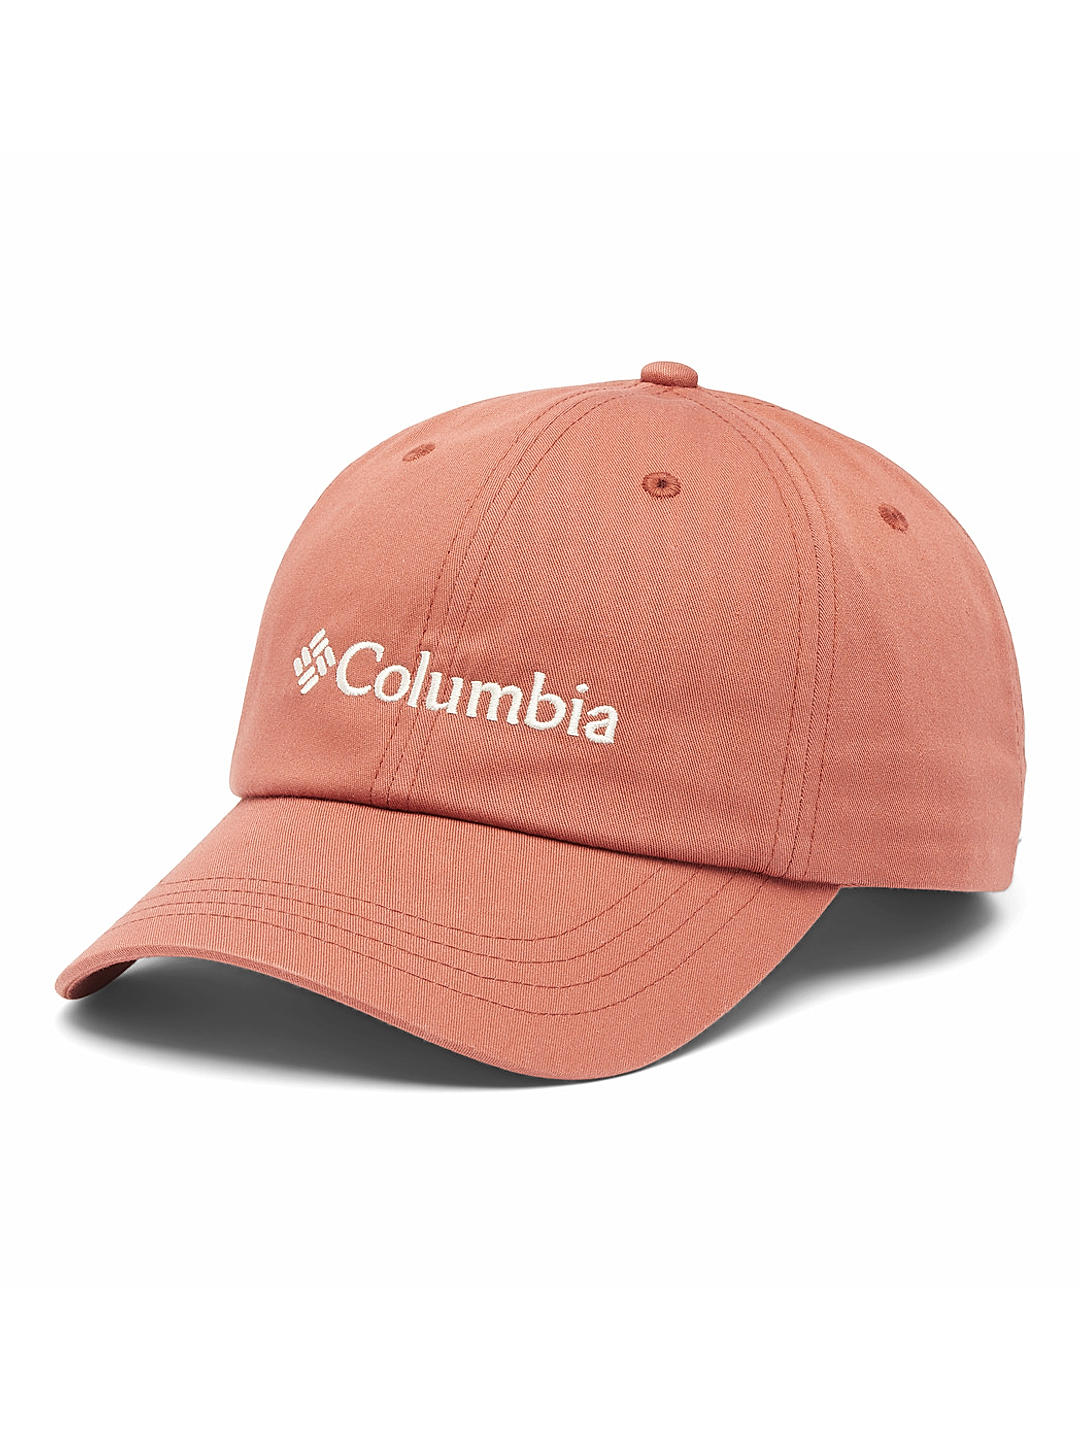 Columbia Unisex Brown Roc II Ball Cap (Sun Protection)